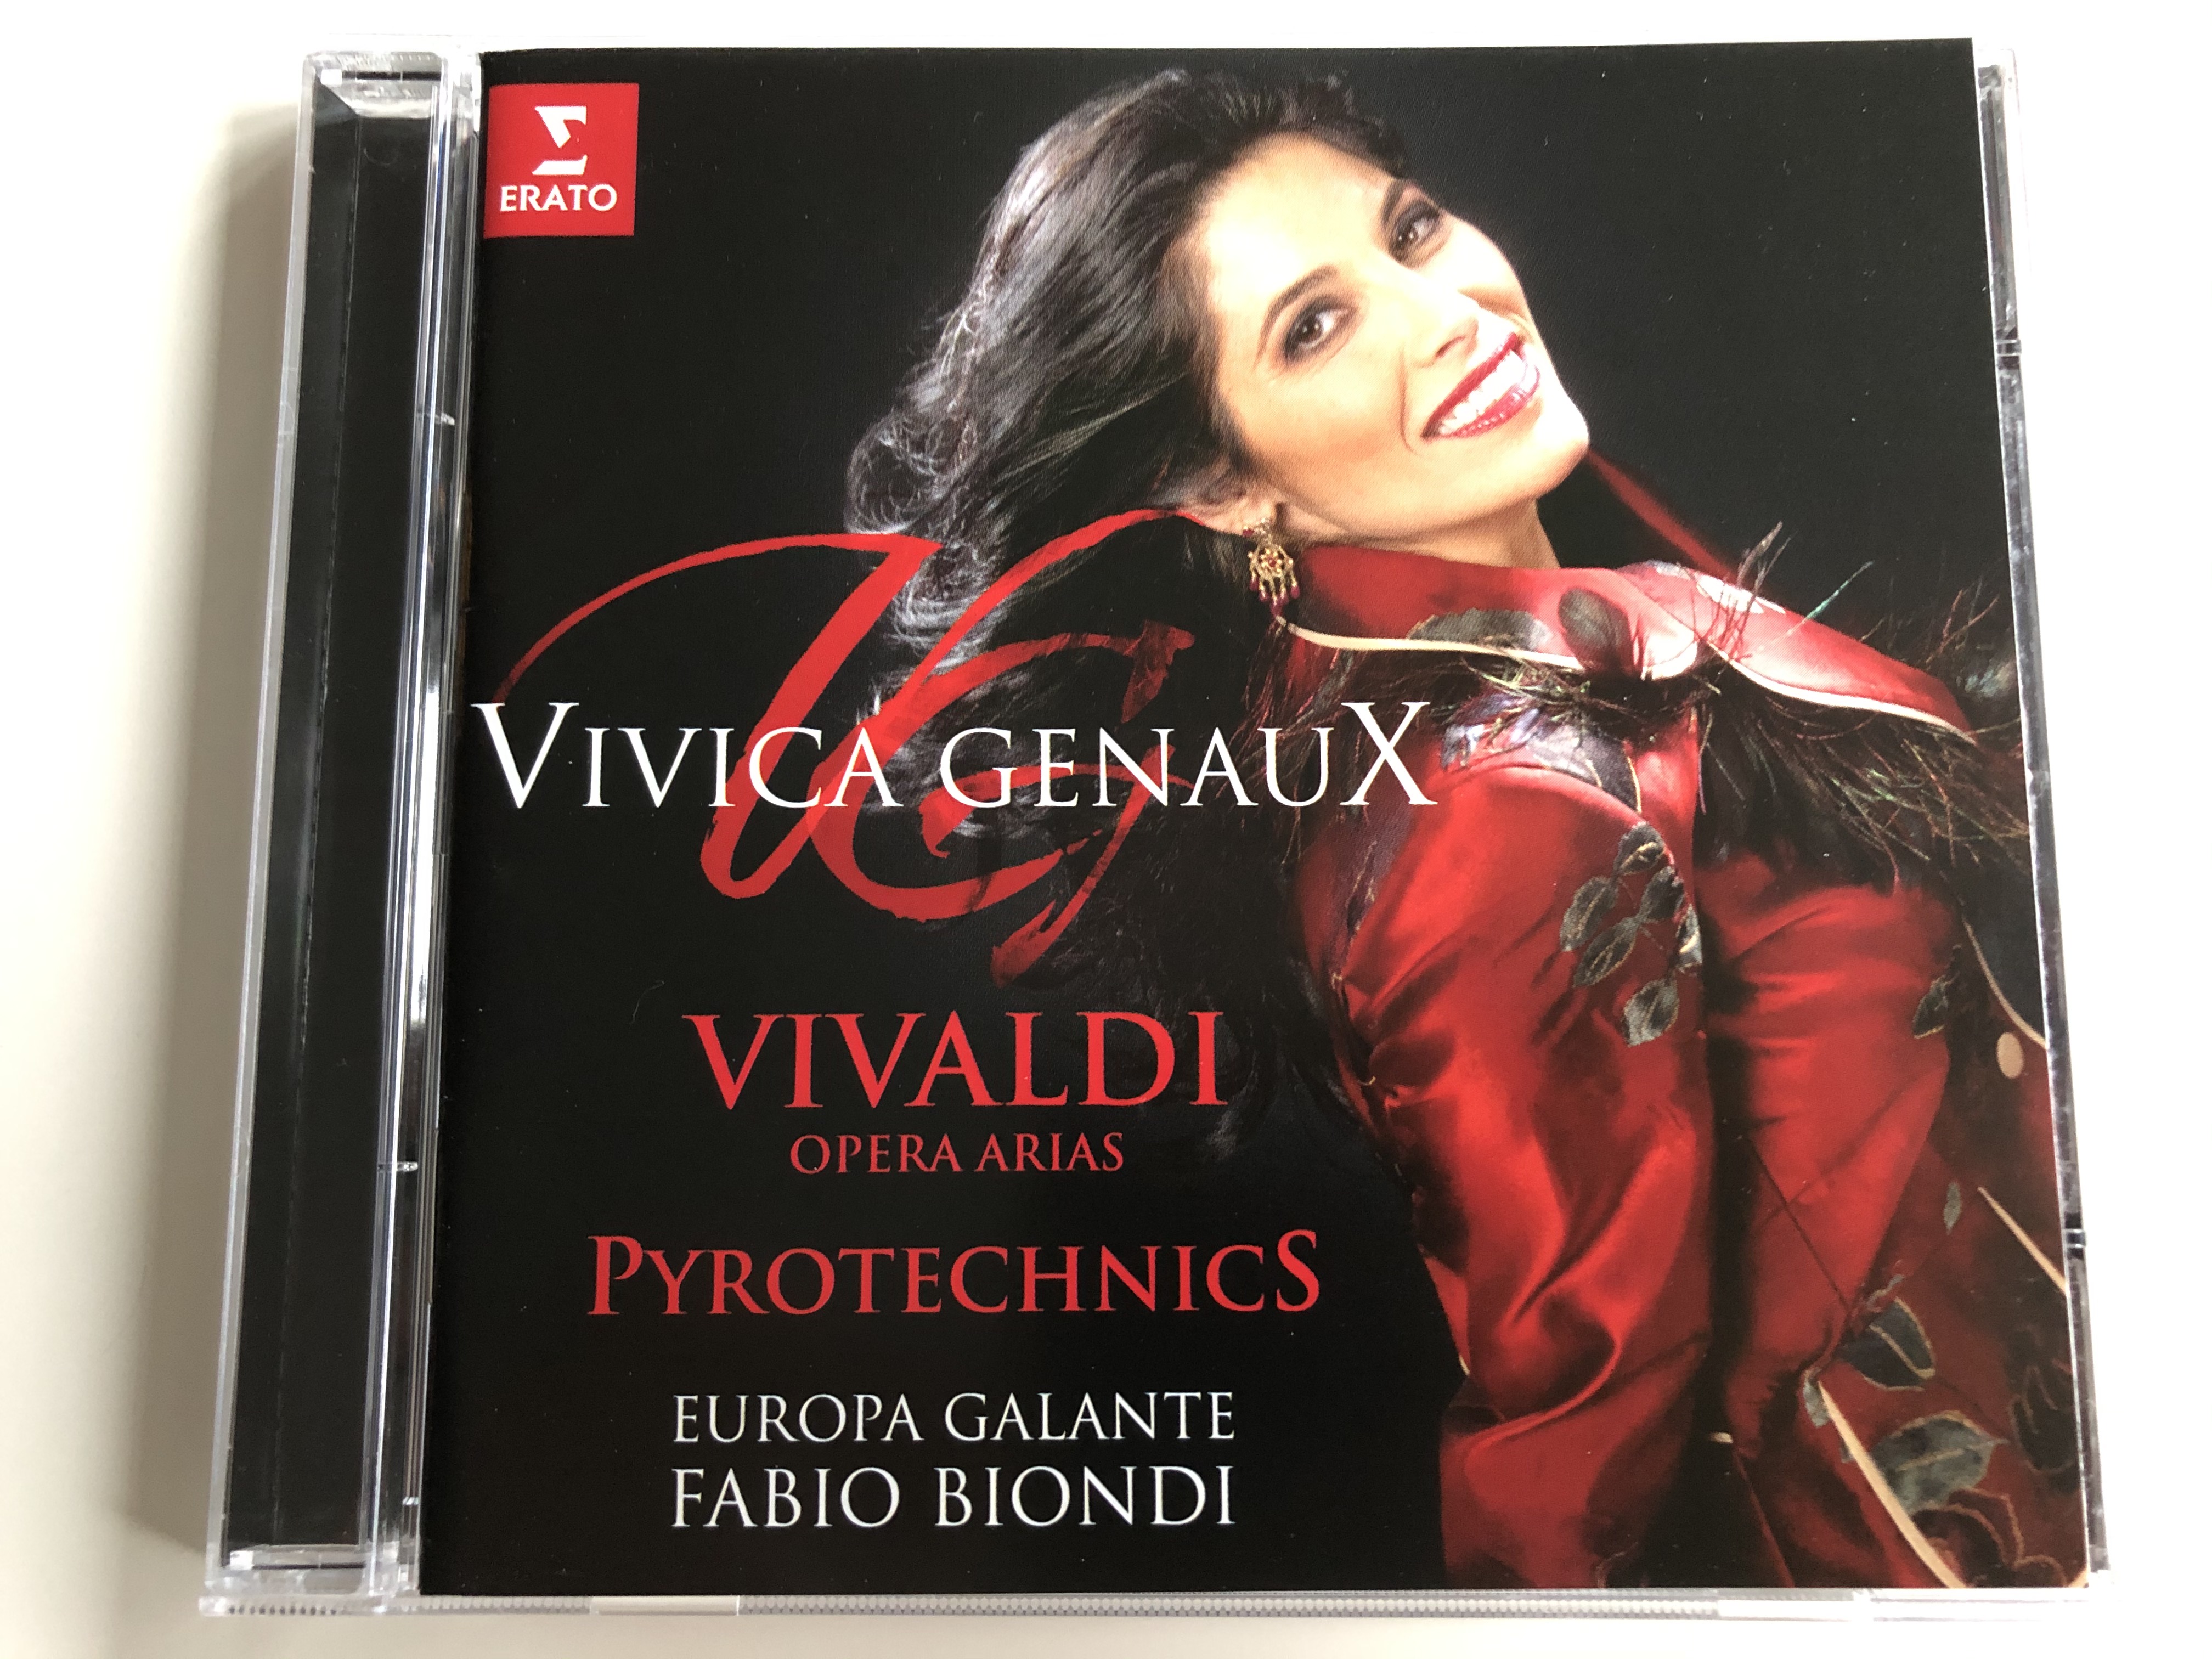 vivica-genaux-vivaldi-arias-pyrotechnics-europa-galante-fabio-biondi-virgin-classics-audio-cd-2009-stereo-5099969457302-1-.jpg